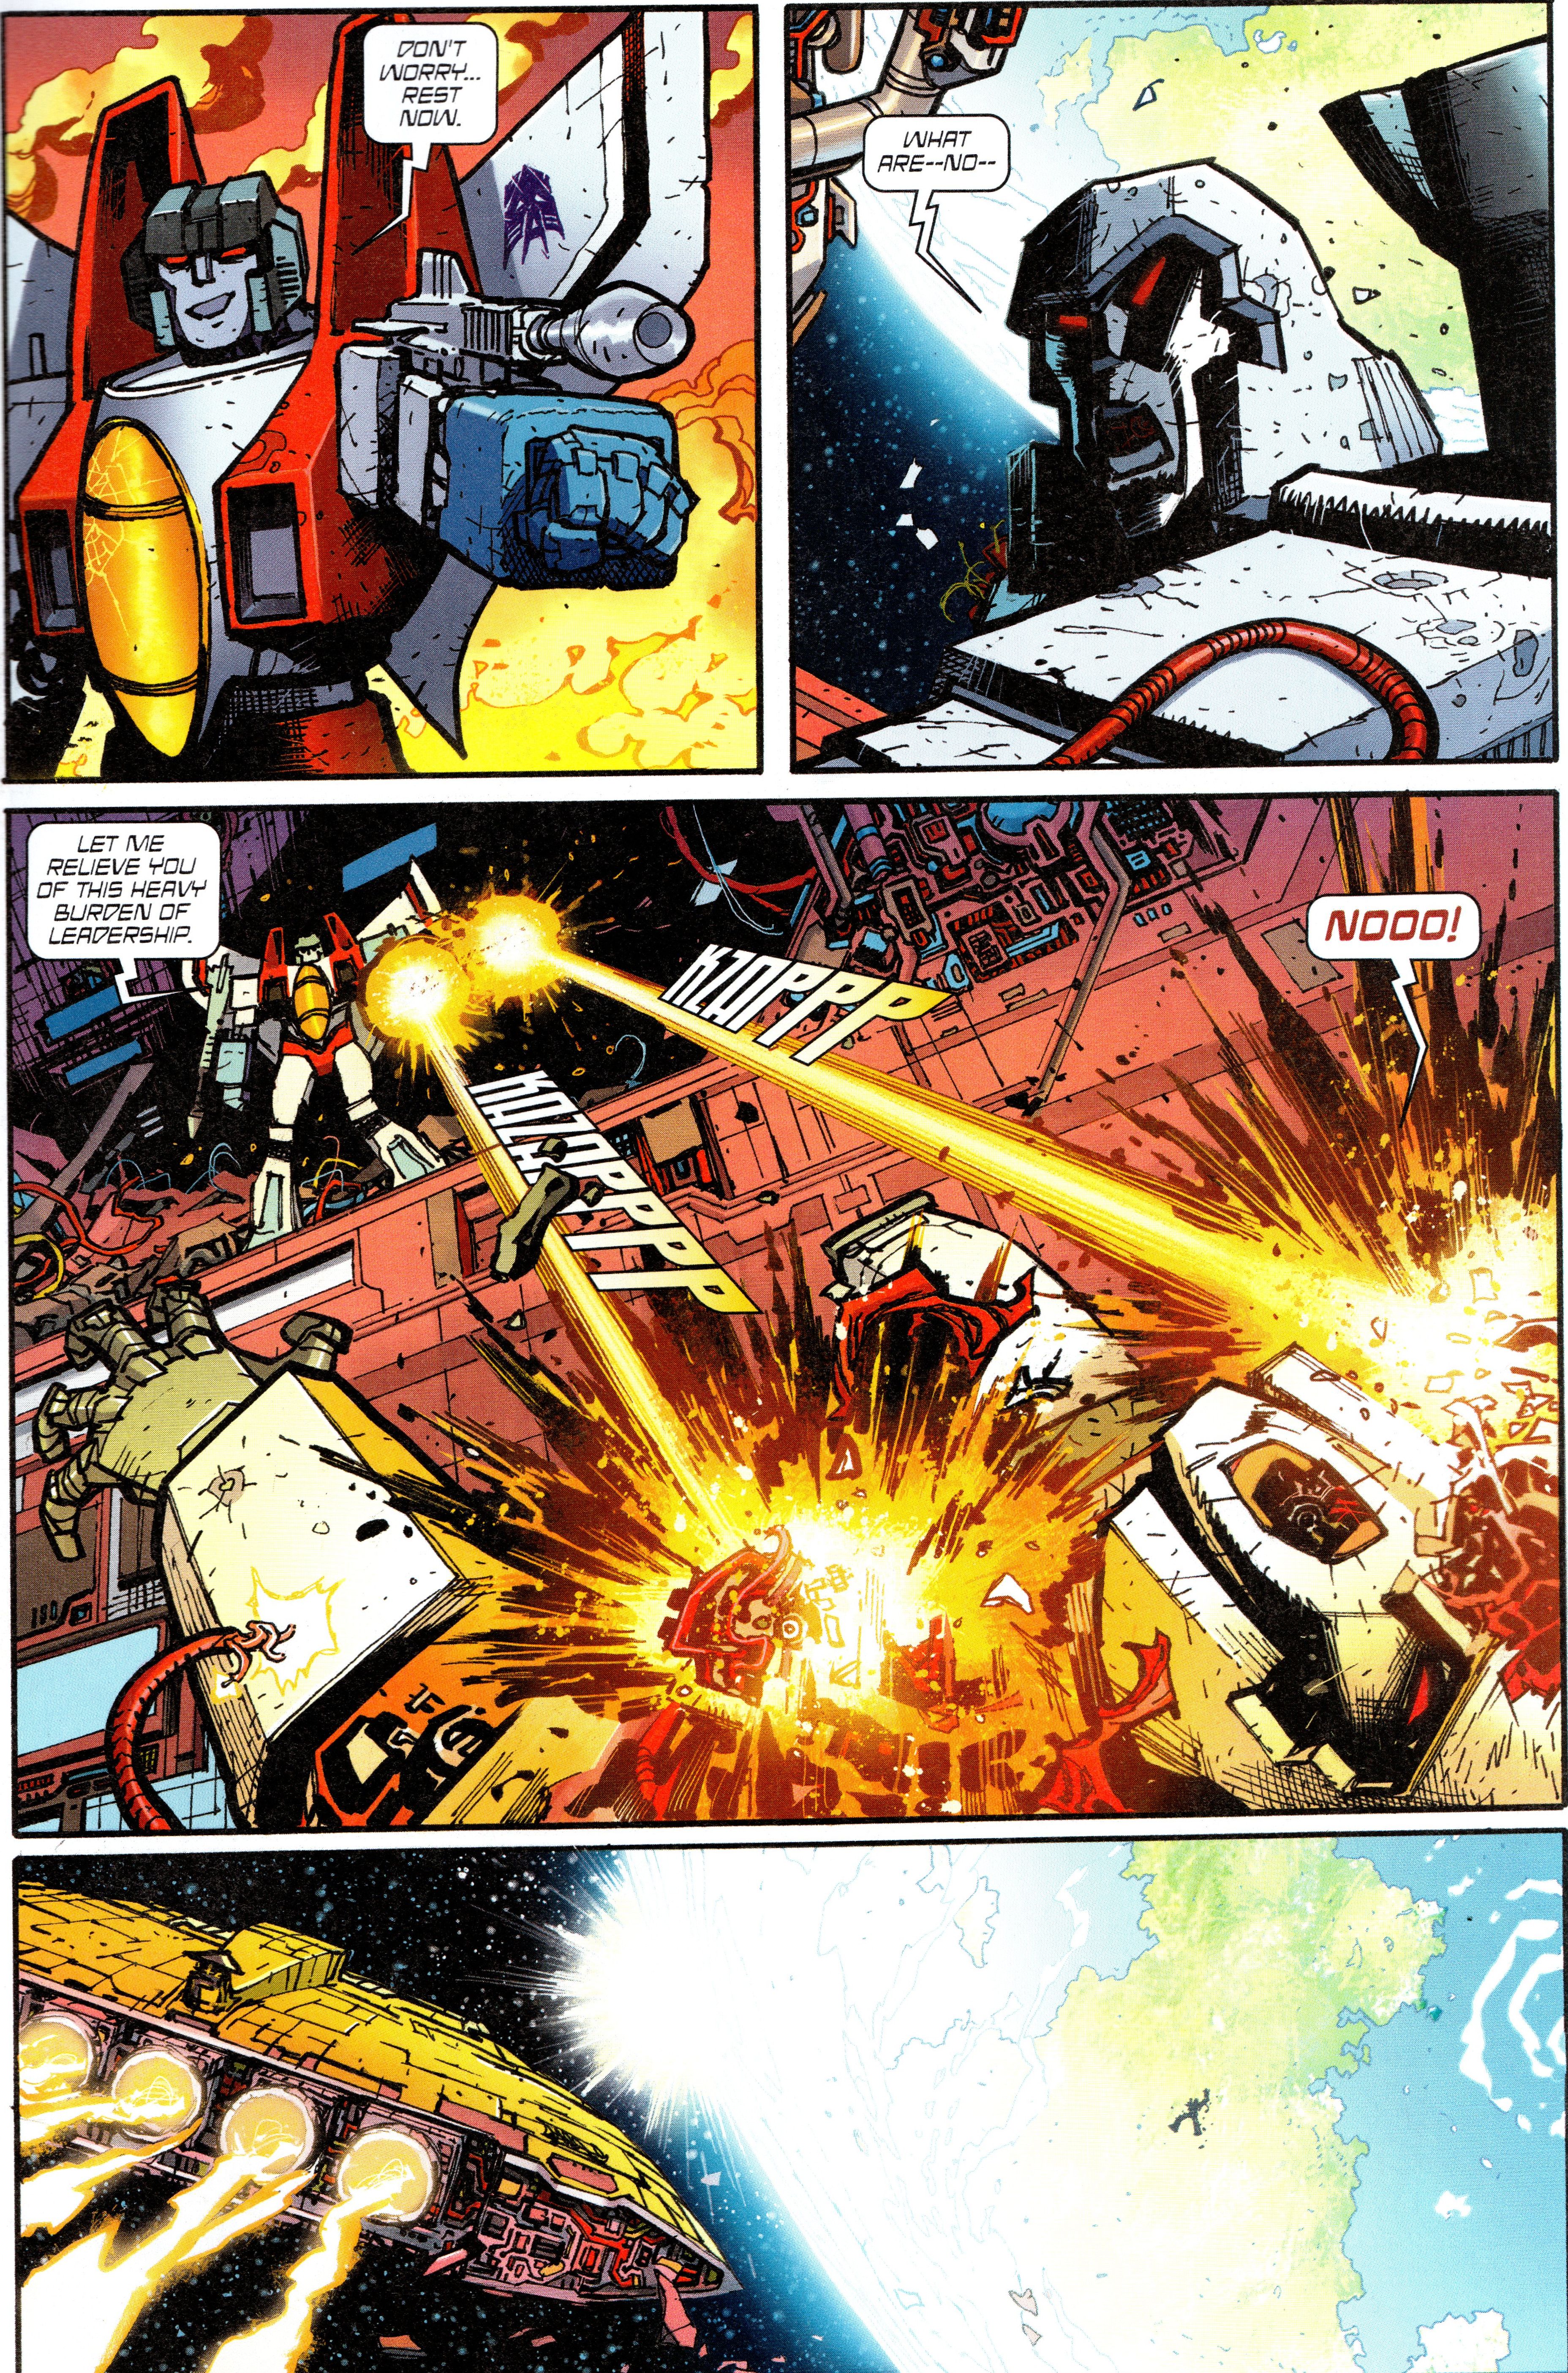 Comic book panels: the Transformer Starscream betrays Megatron in space..